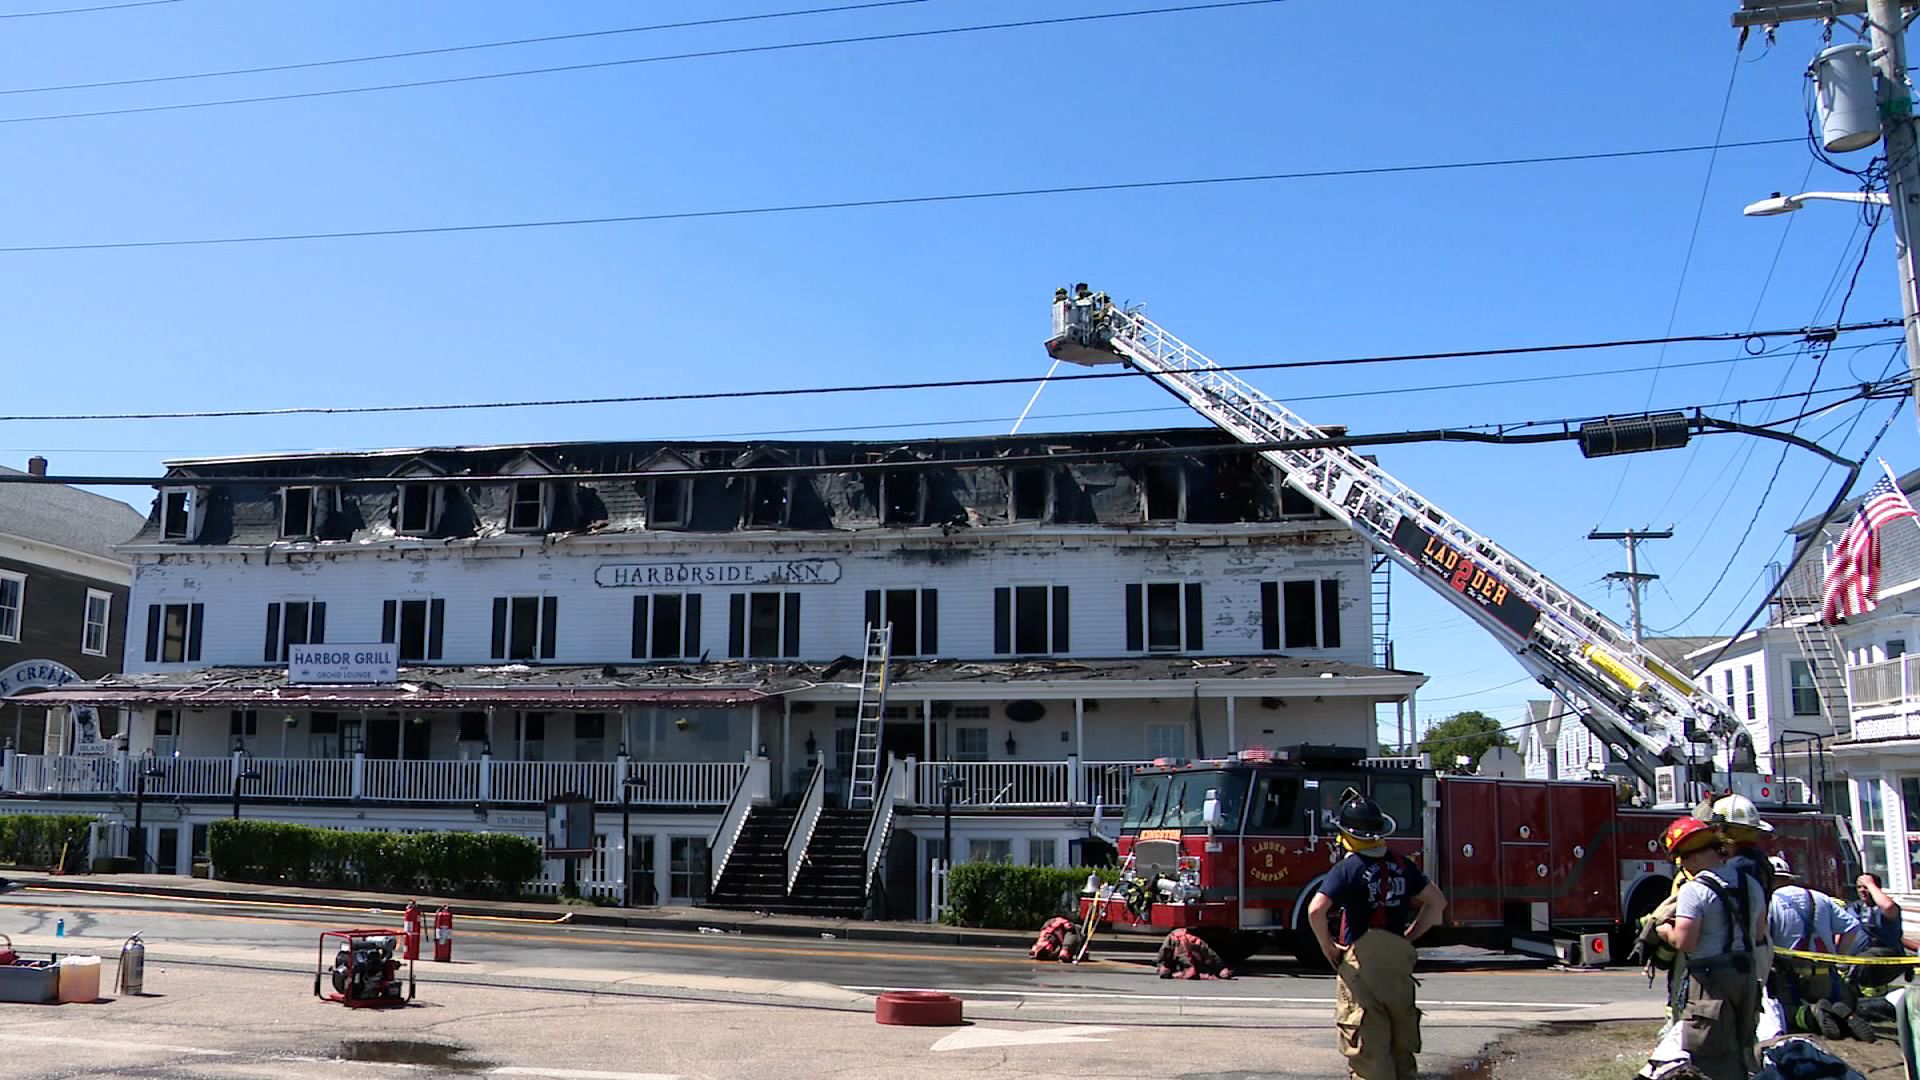 Block Island hotel fire: Flames ravage Rhode Island's Harborside Inn